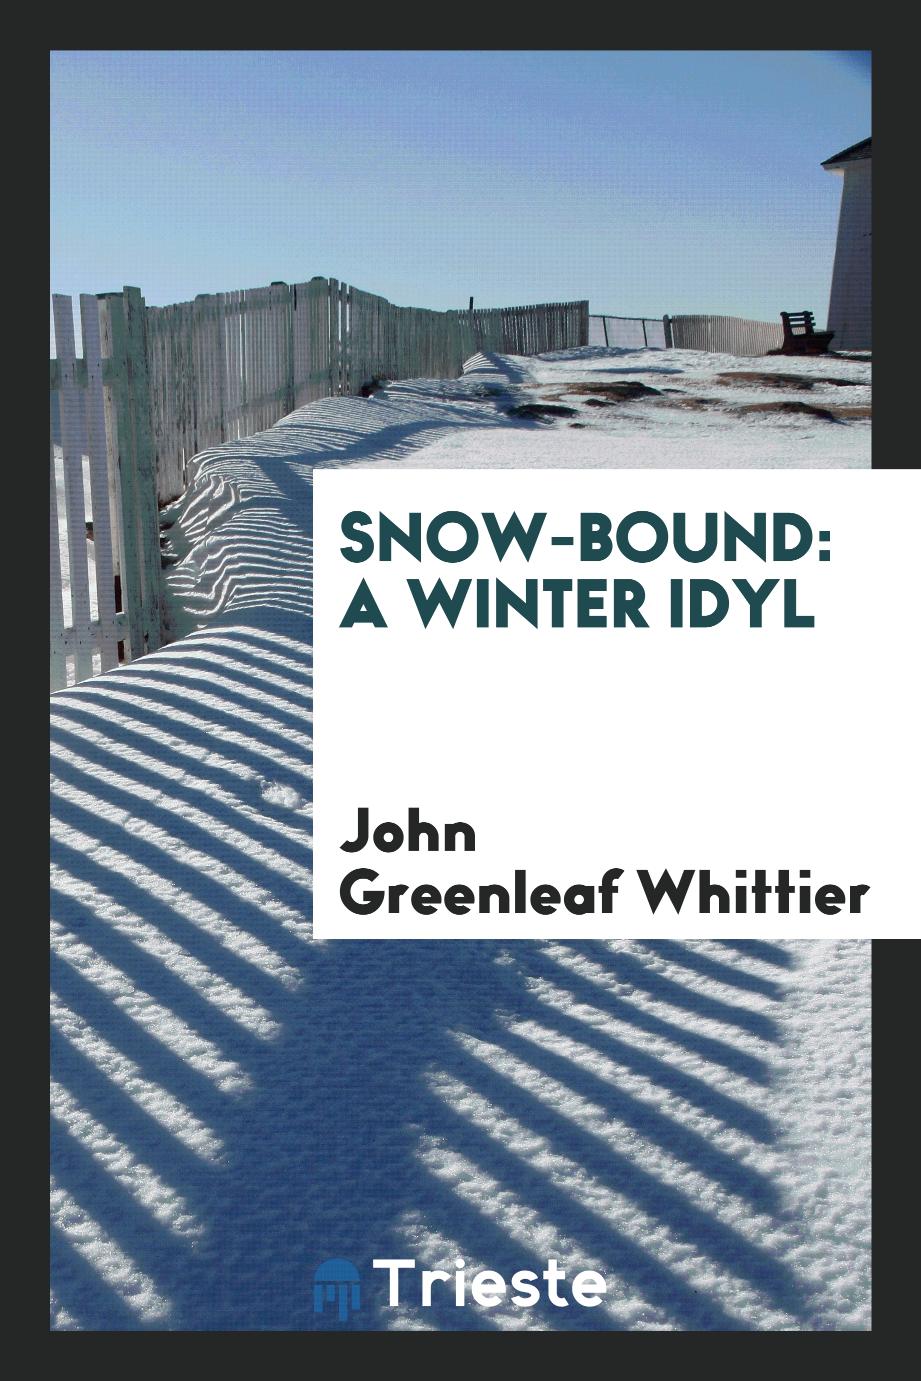 Snow-bound: a winter idyl